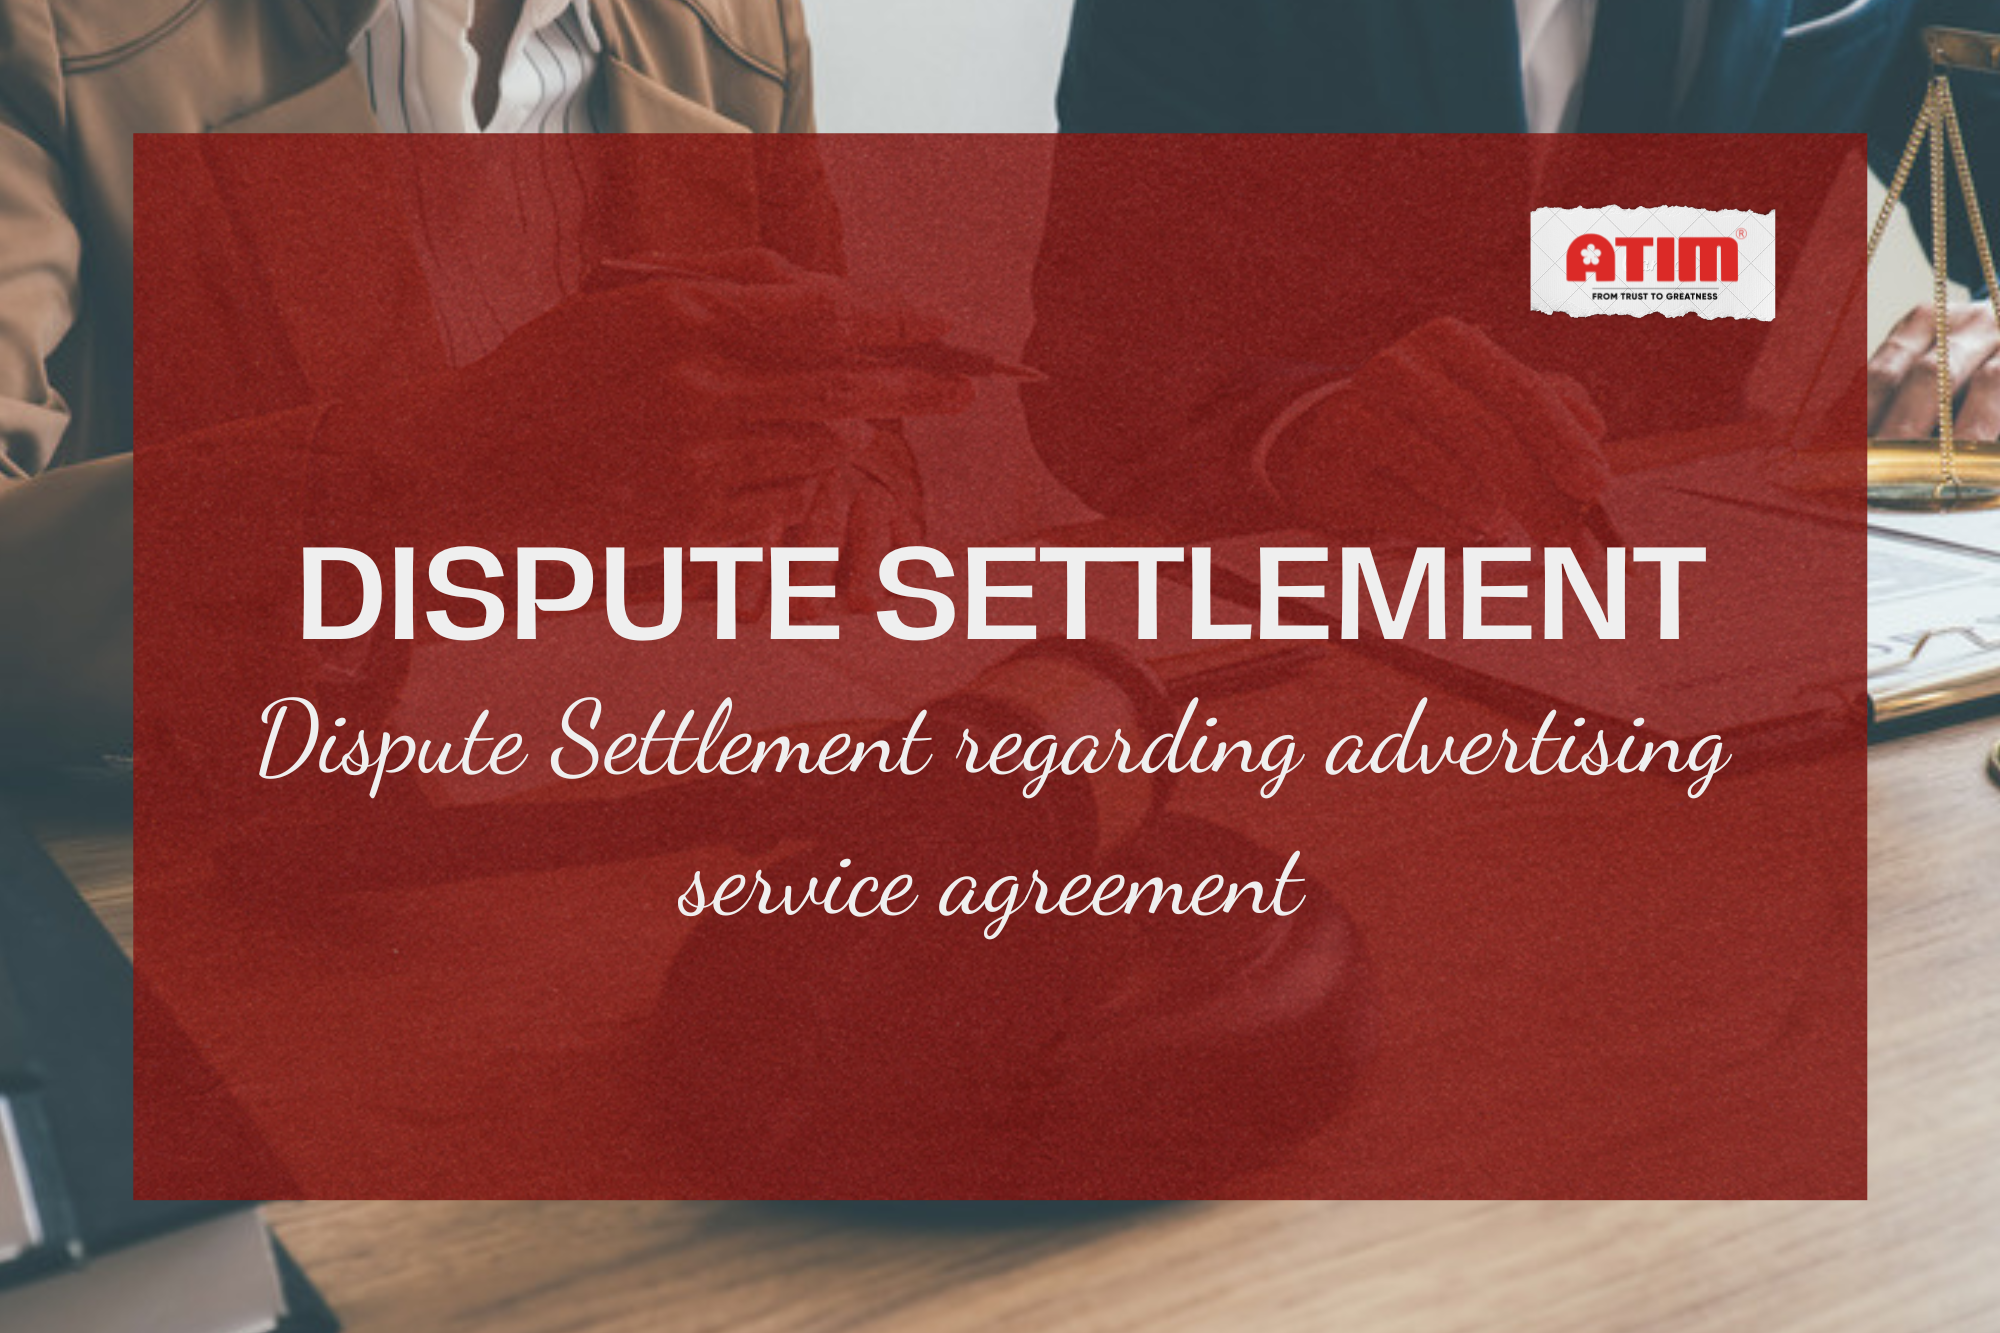 Dispute Settlement - Regarding advertising service contract